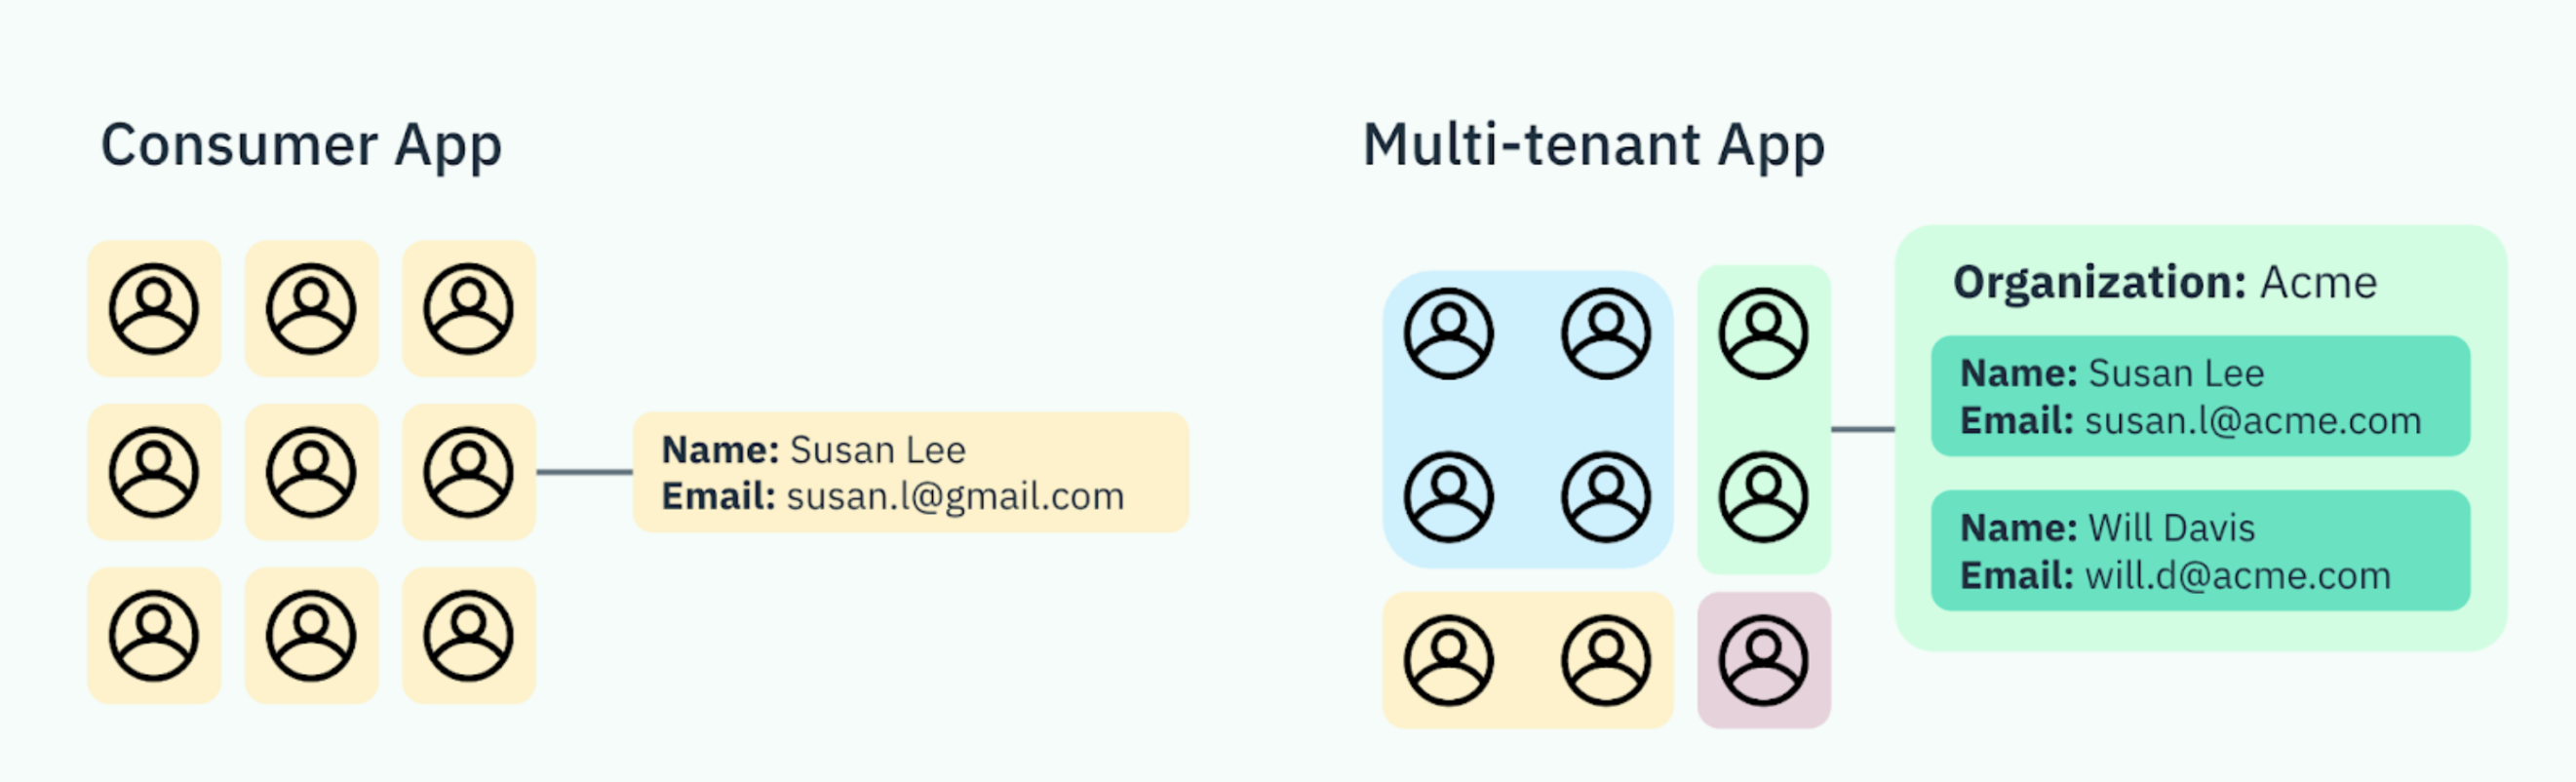 consumer app vs multi tenant app